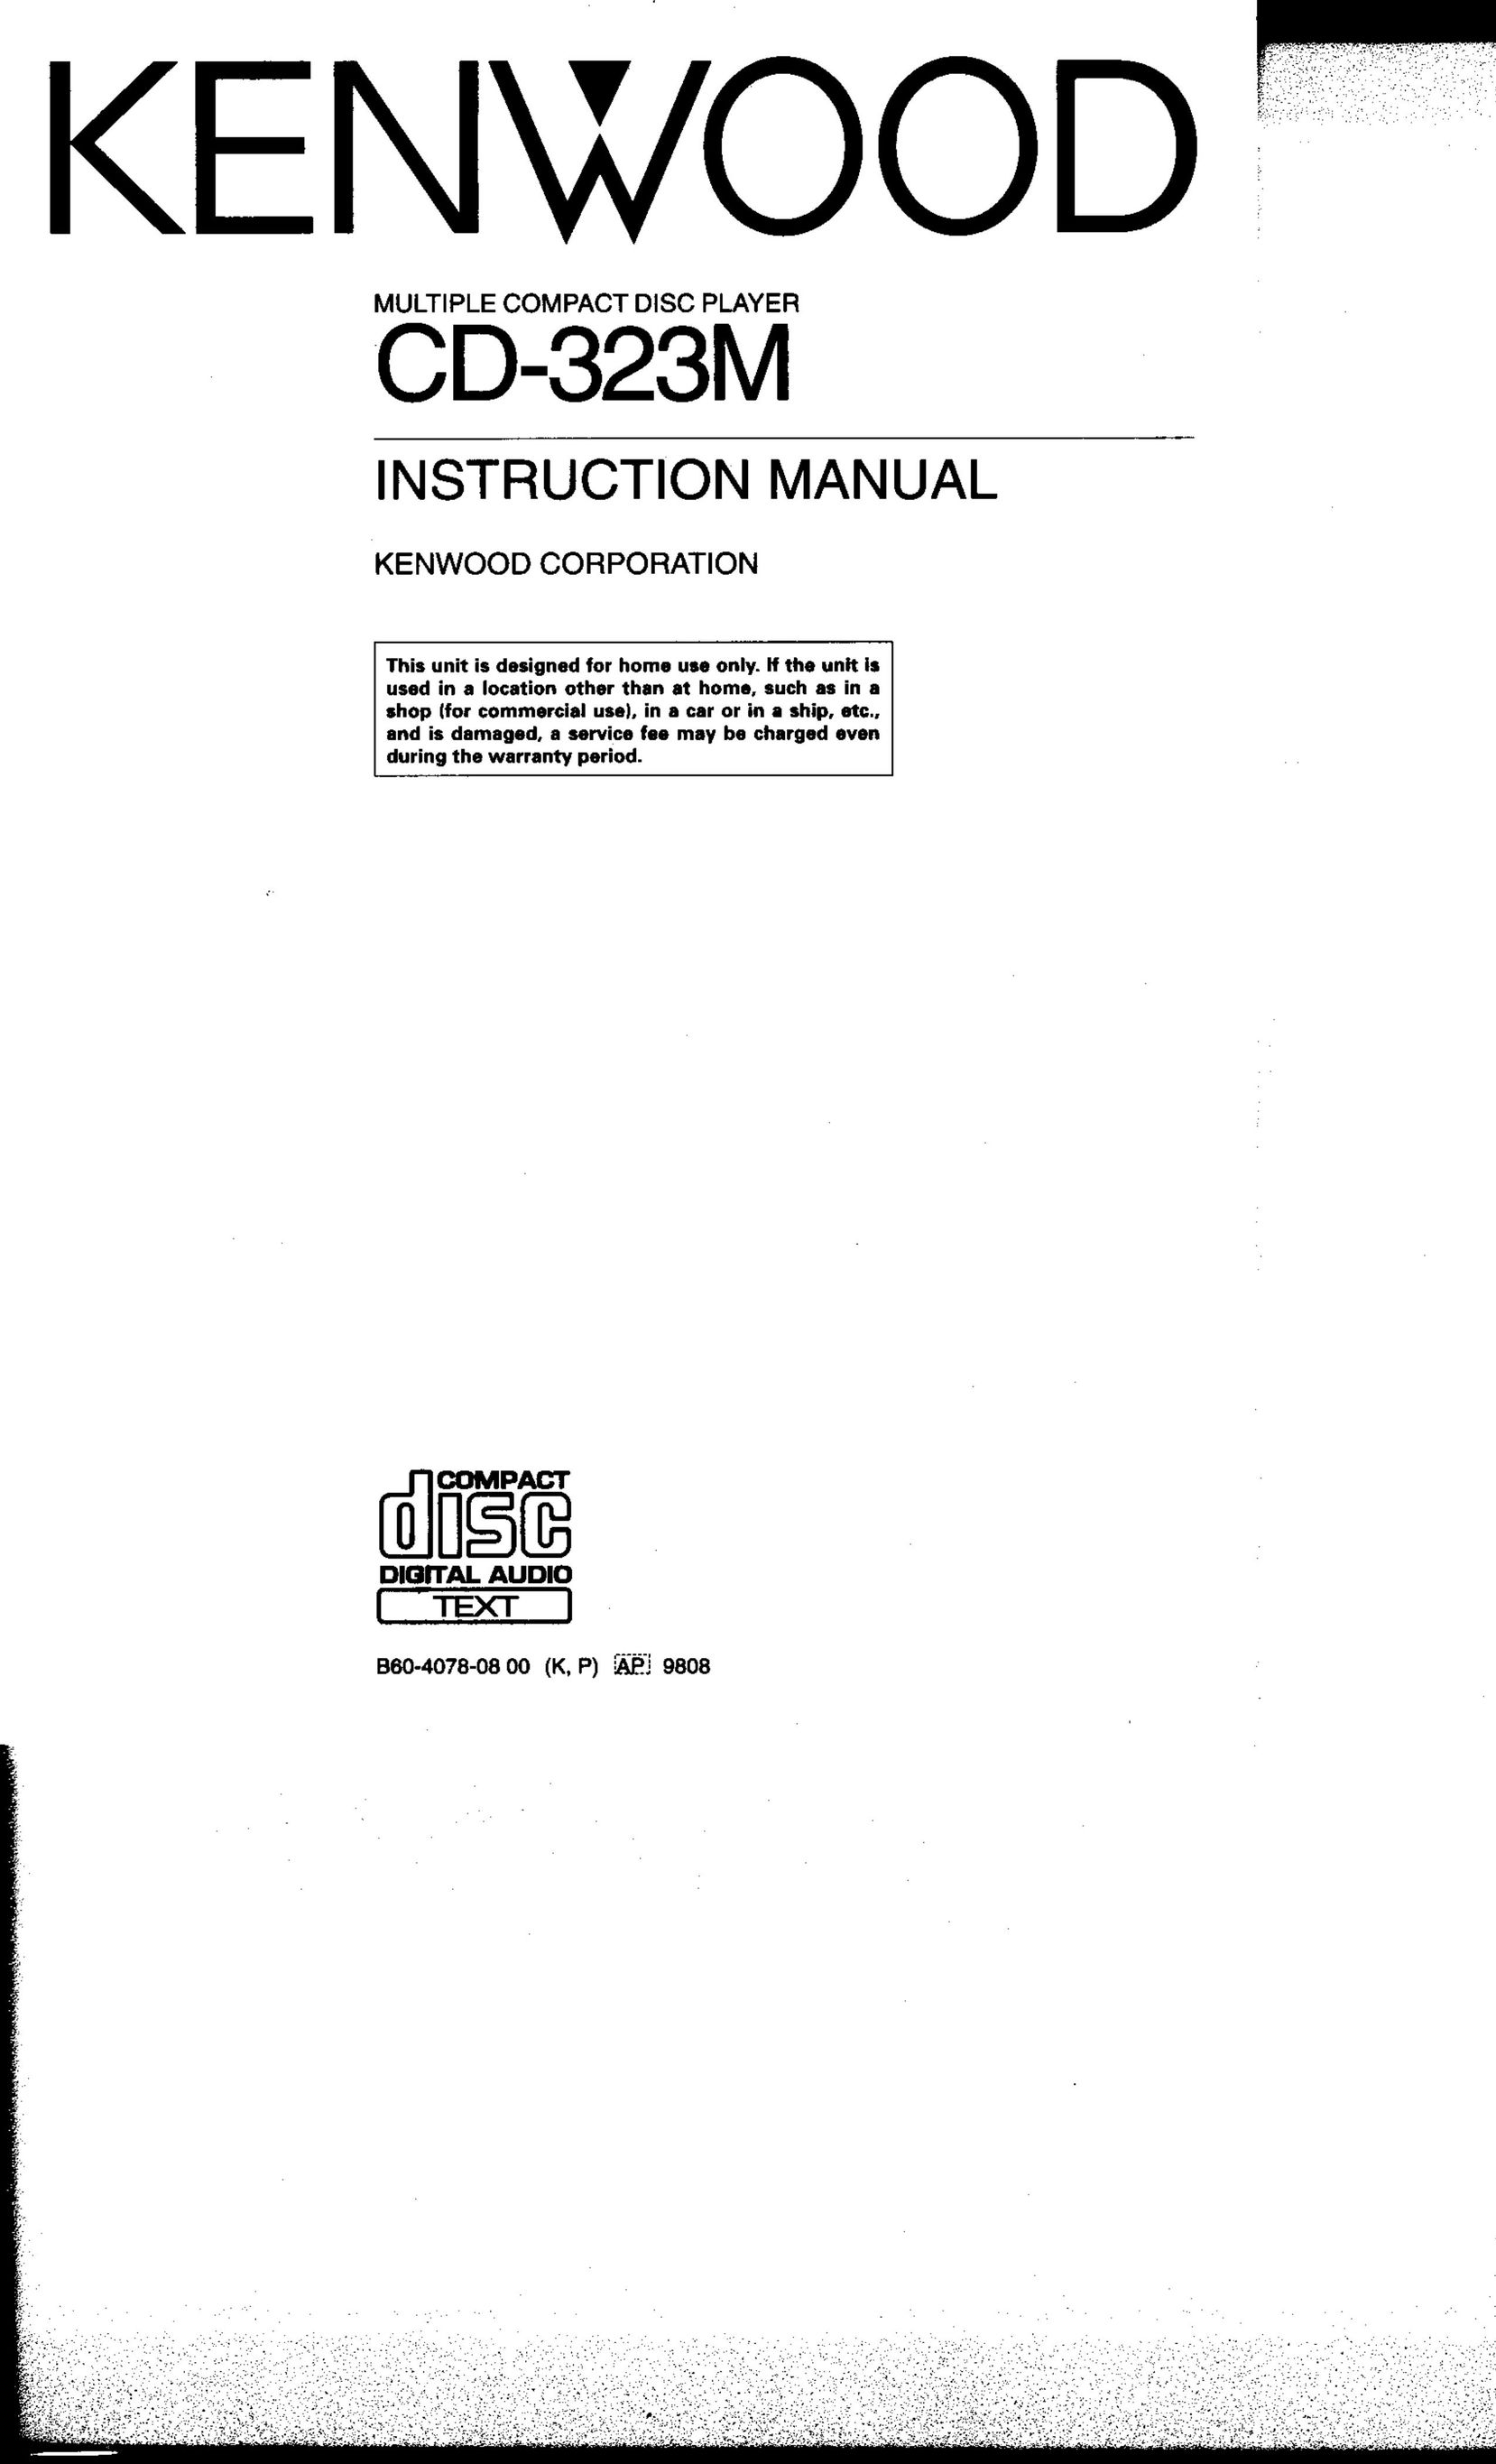 Kenwood CD-323M Stereo System User Manual